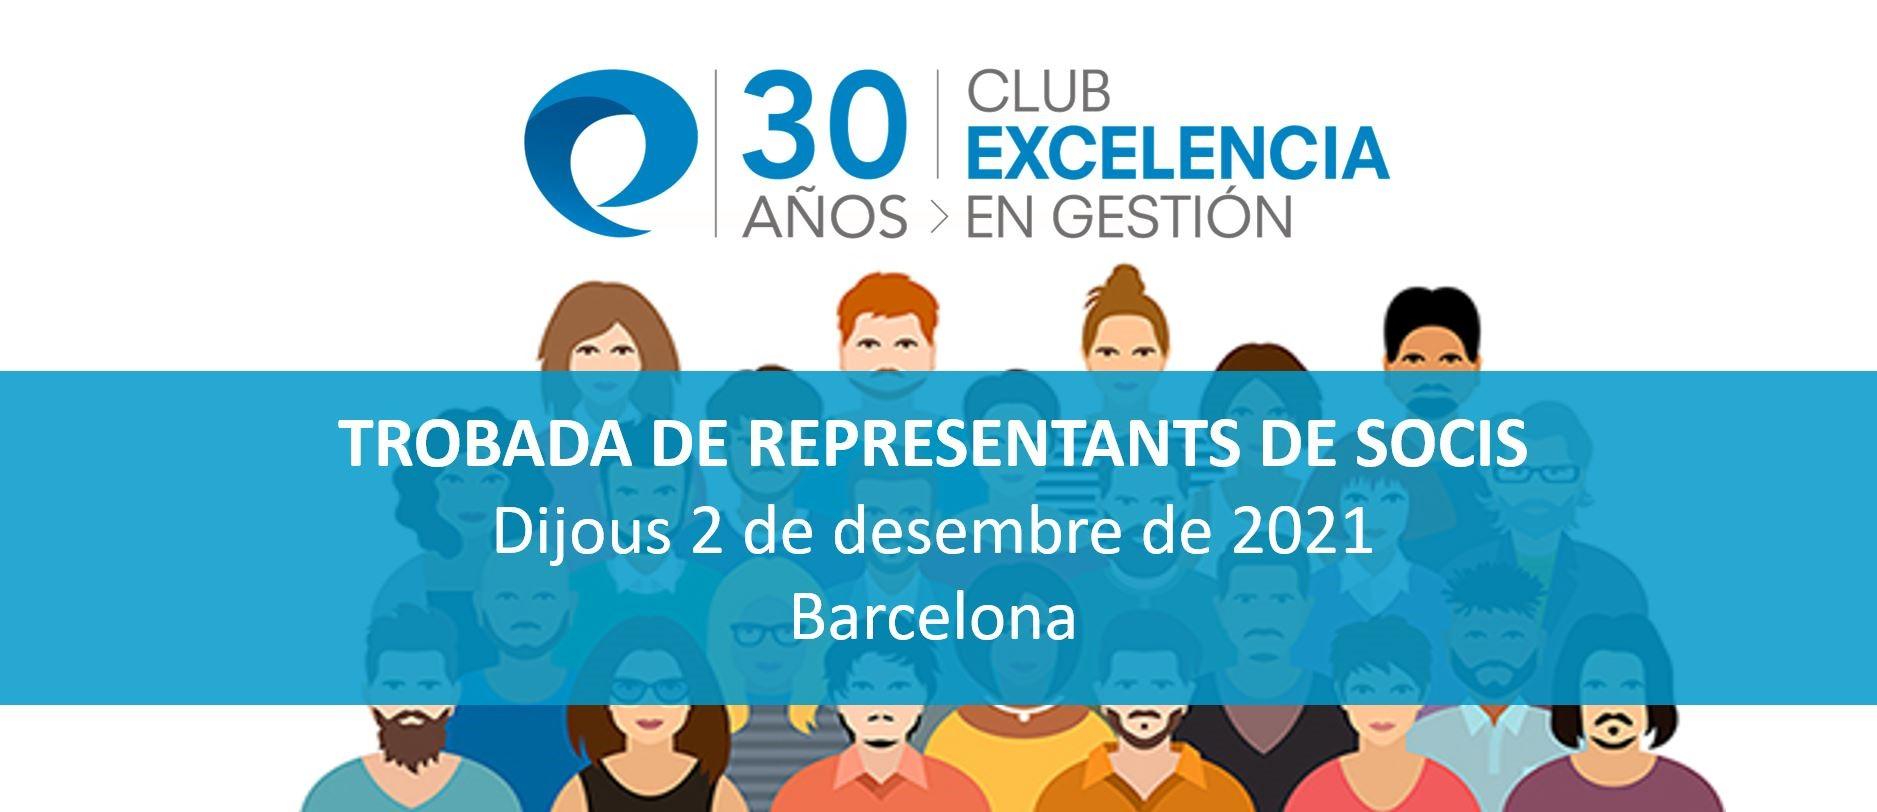 Trobada de representats - 2021 - Encuentro de representantes